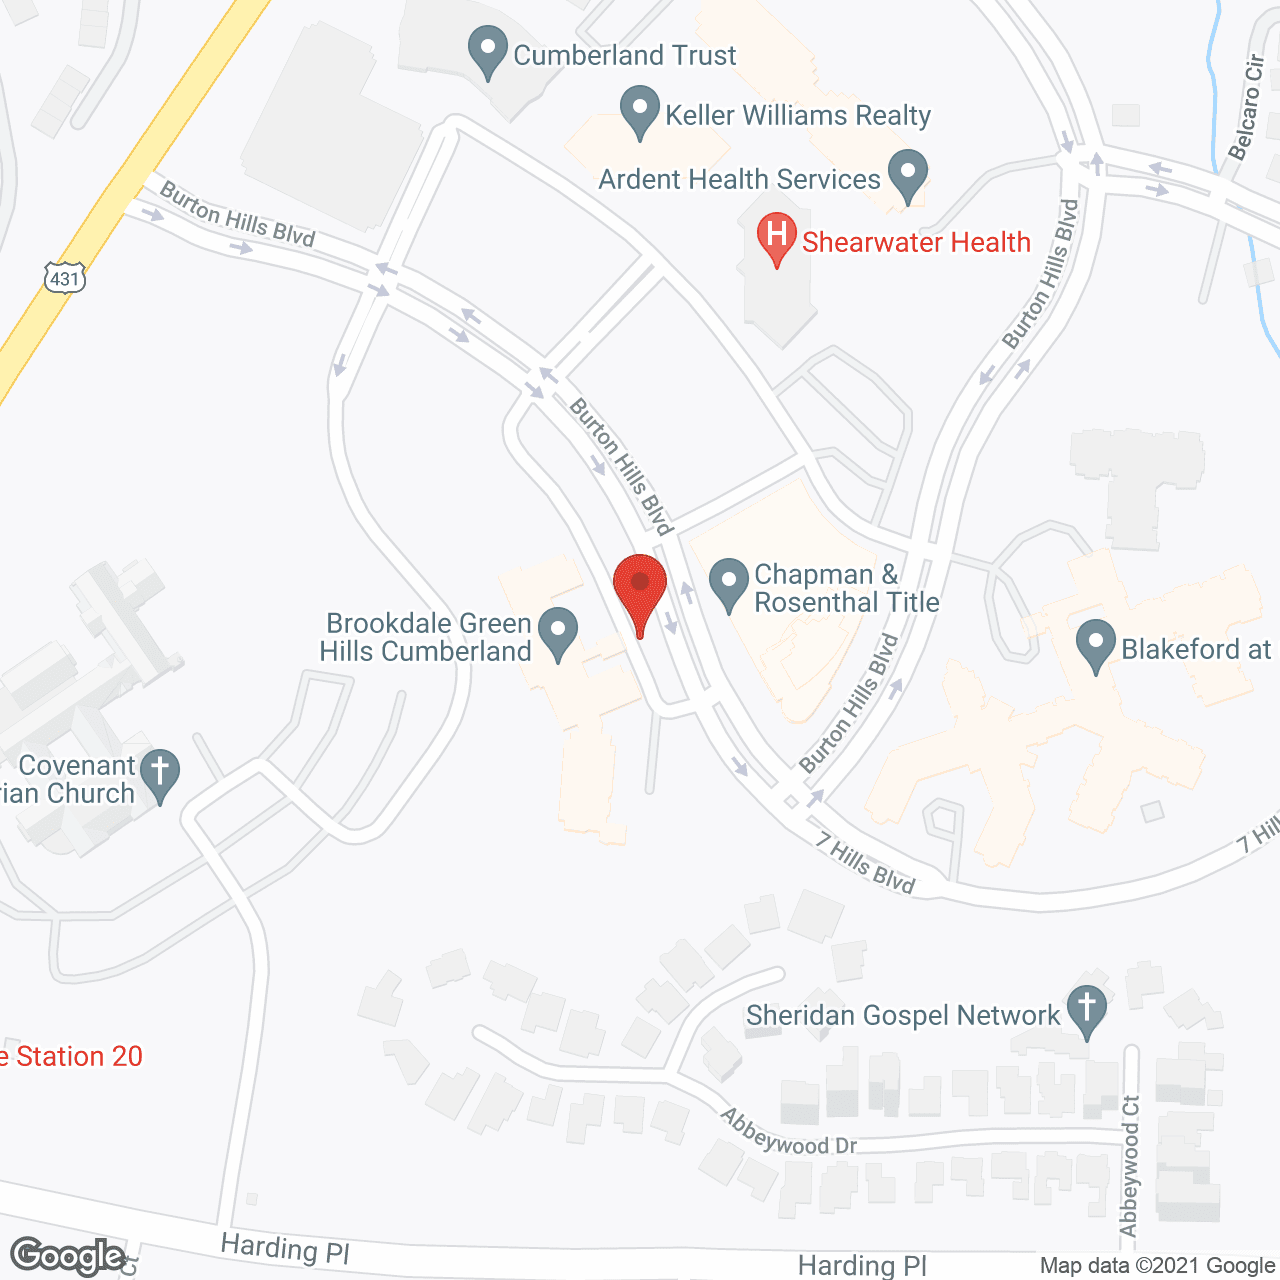 Brookdale Green Hills Cumberland in google map